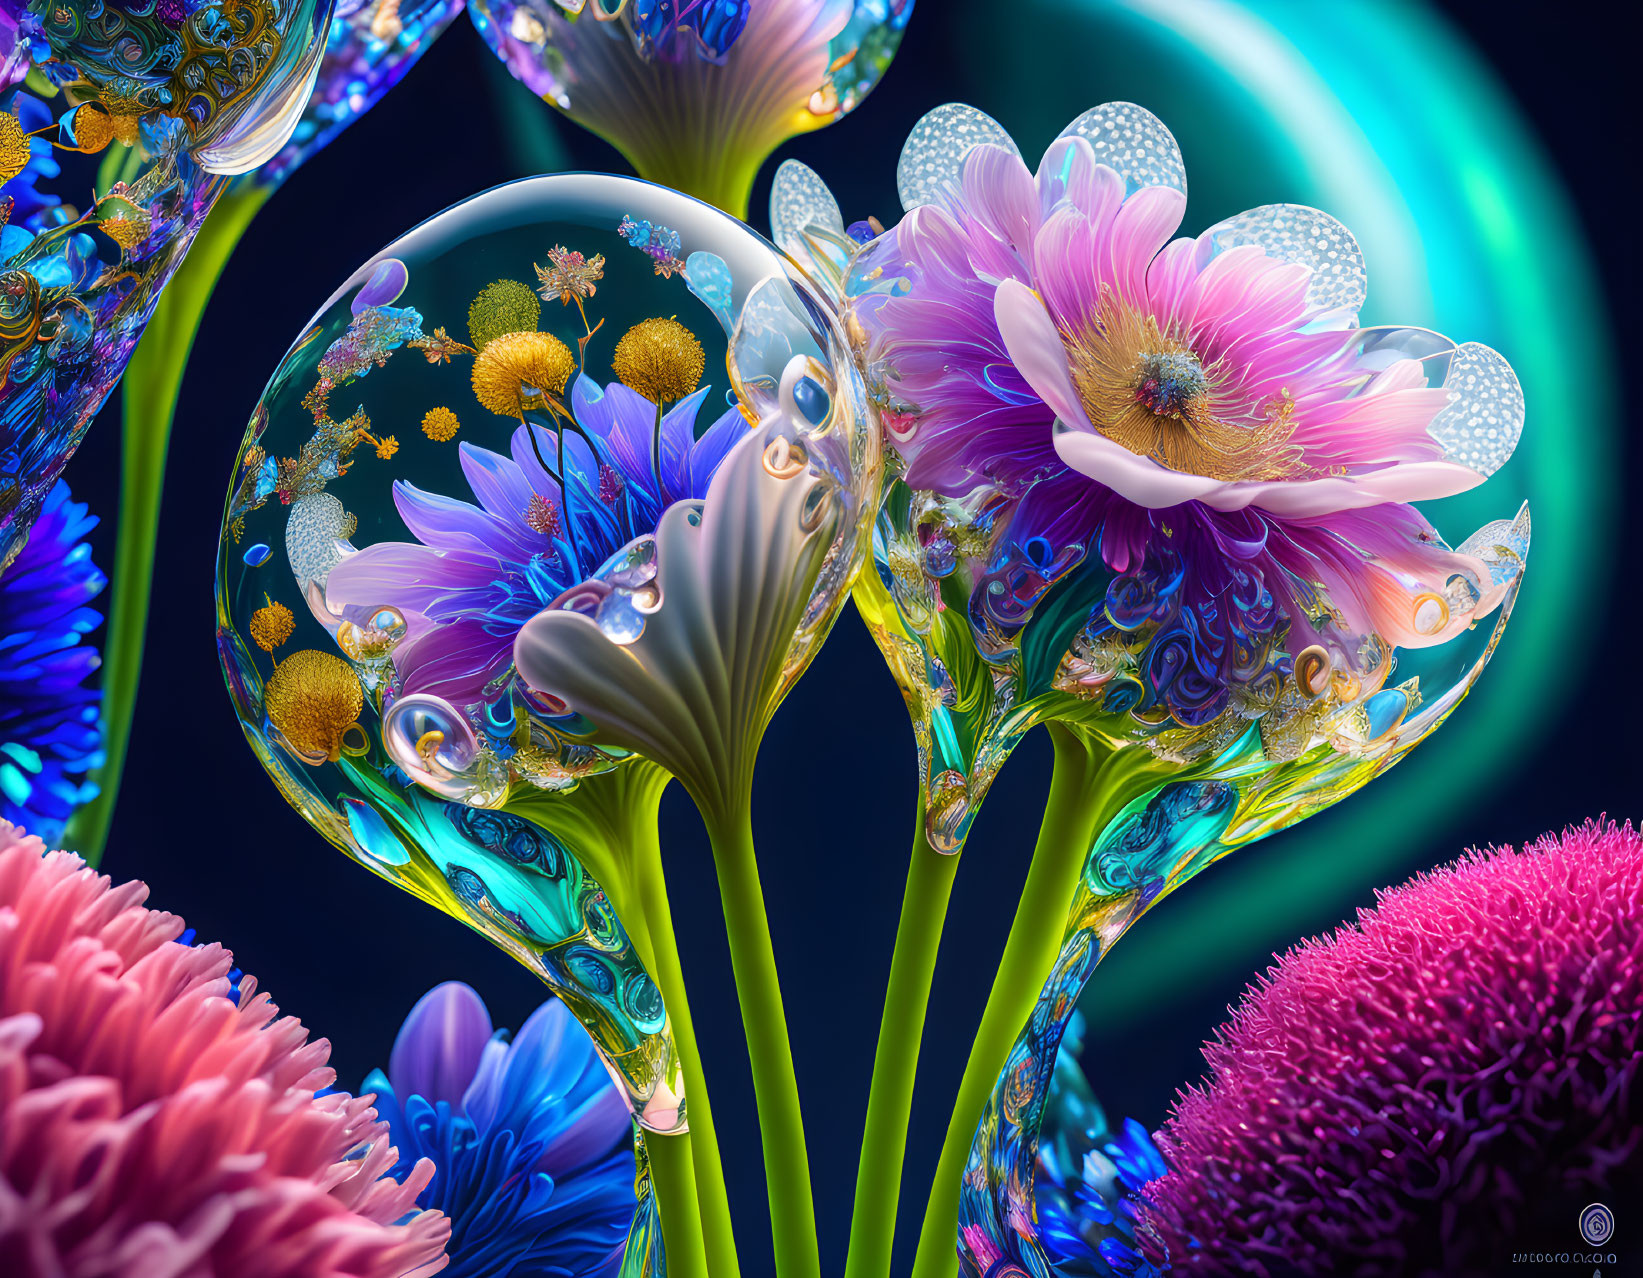 Colorful Fantasy Flower and Sphere Artwork on Dark Bokeh Background